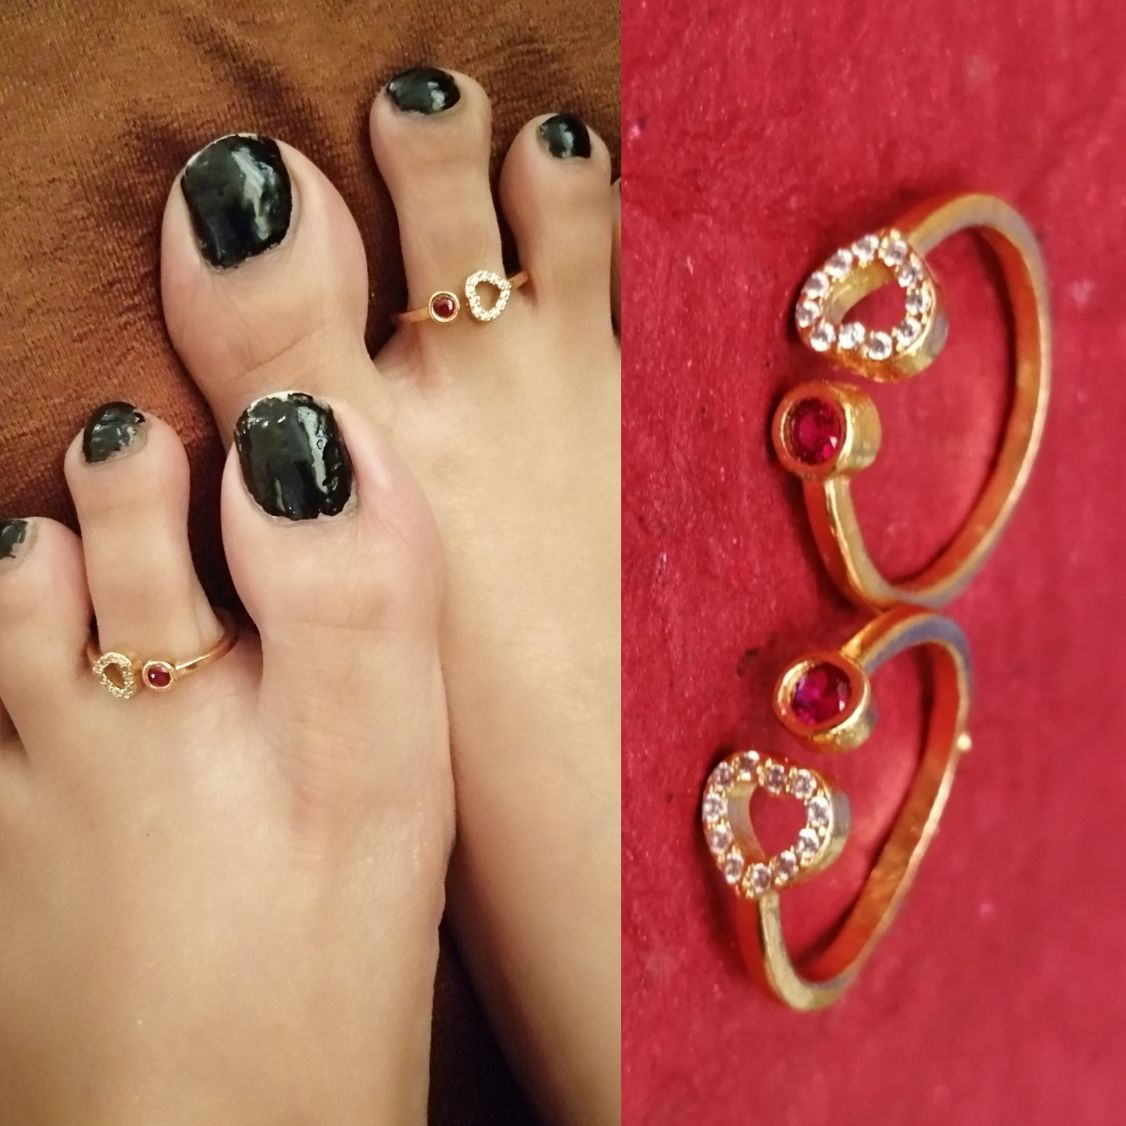 14k Solid Gold Toe Rings – Chapman Jewelry